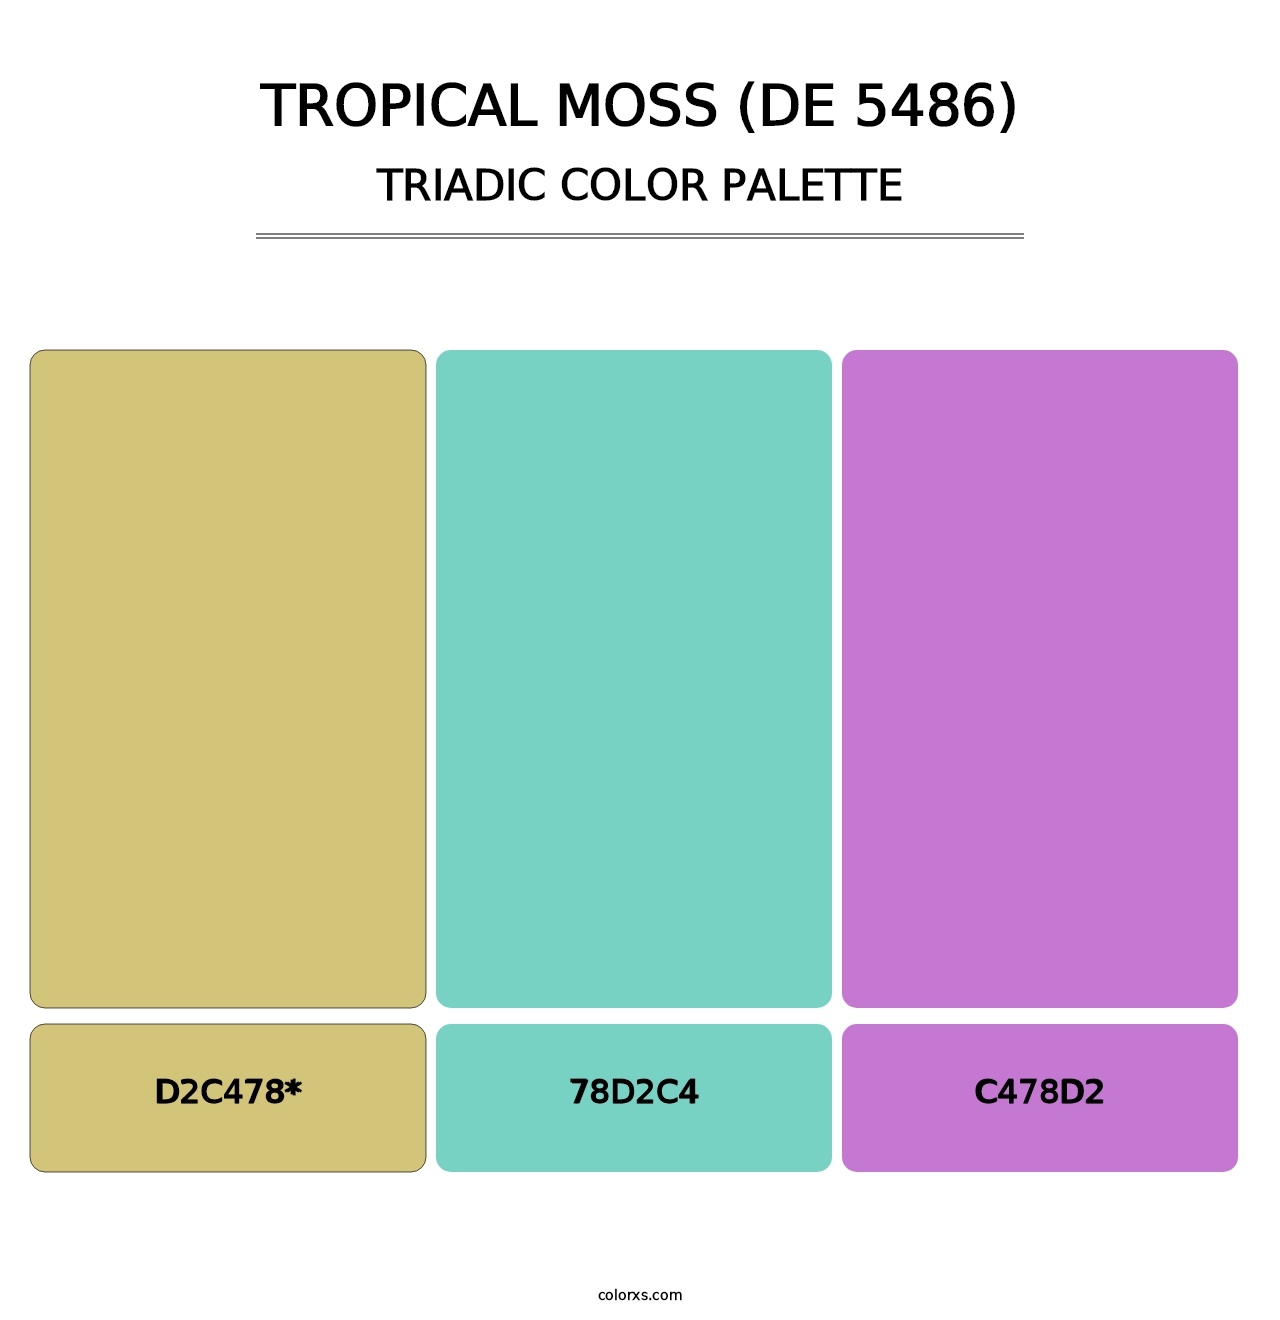 Tropical Moss (DE 5486) - Triadic Color Palette